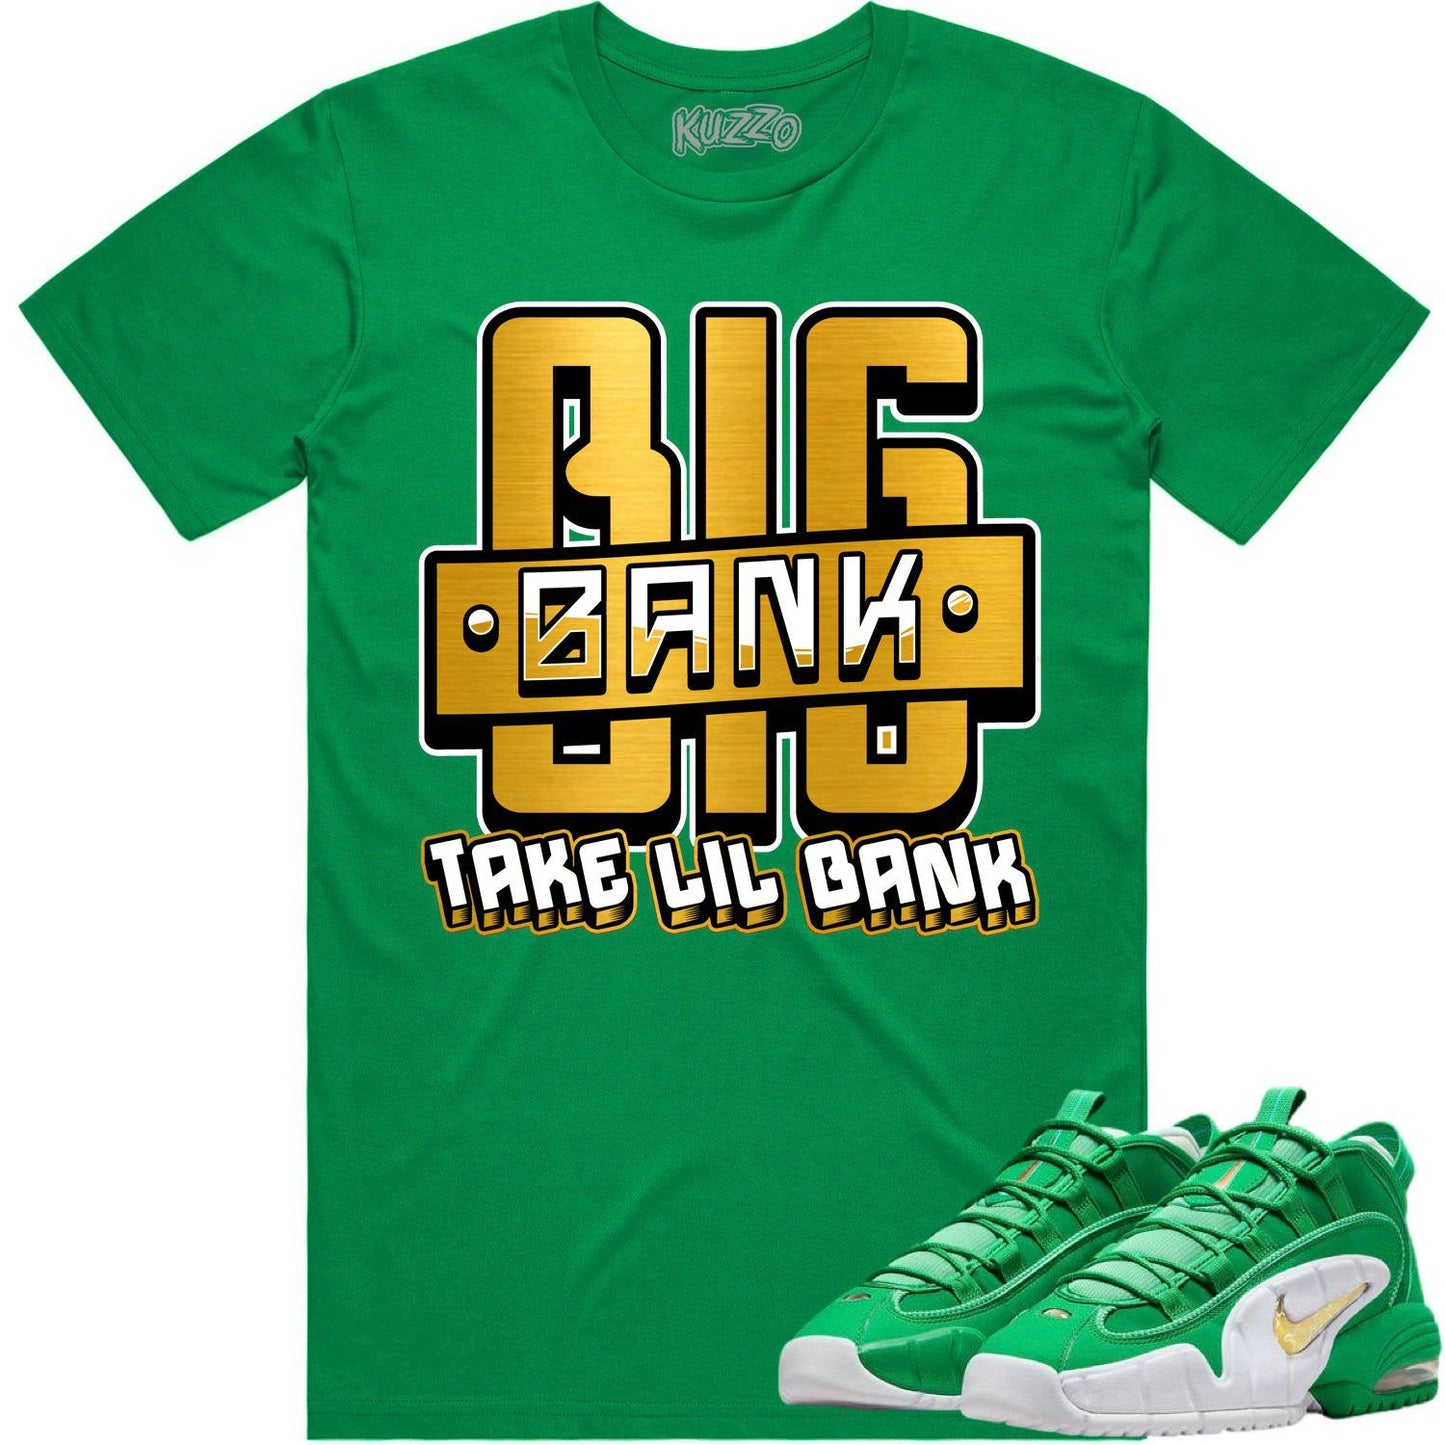 Penny 1 Stadium Green 1s Shirt - Sneaker Tees - Gold Metallic Big Bank